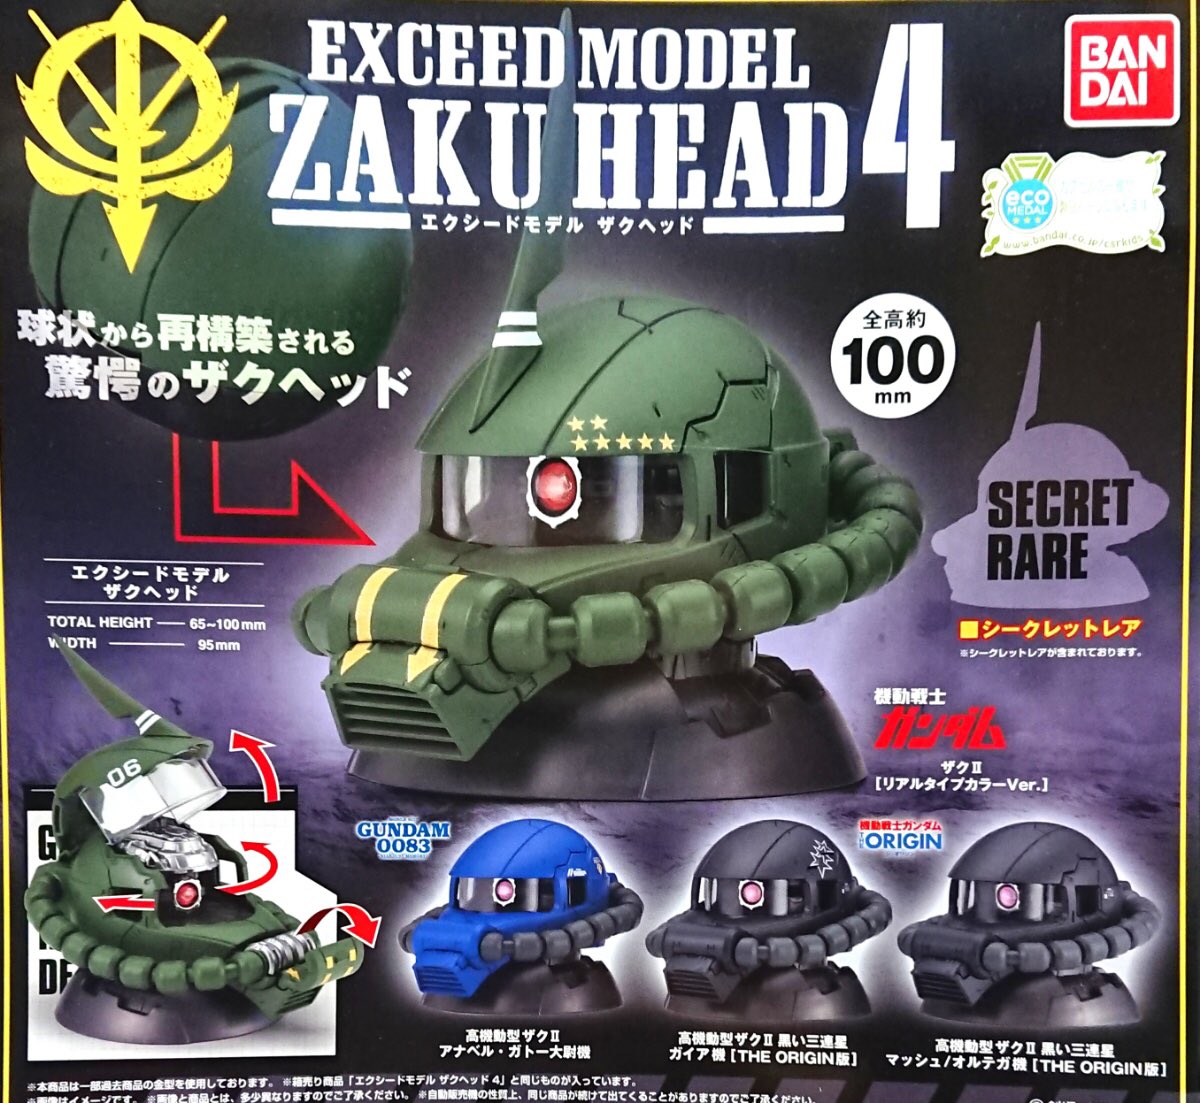 Toys Hobbies Mobile Suit Gundam Exceed Model Zaku Head4 All Four Set Models Kits